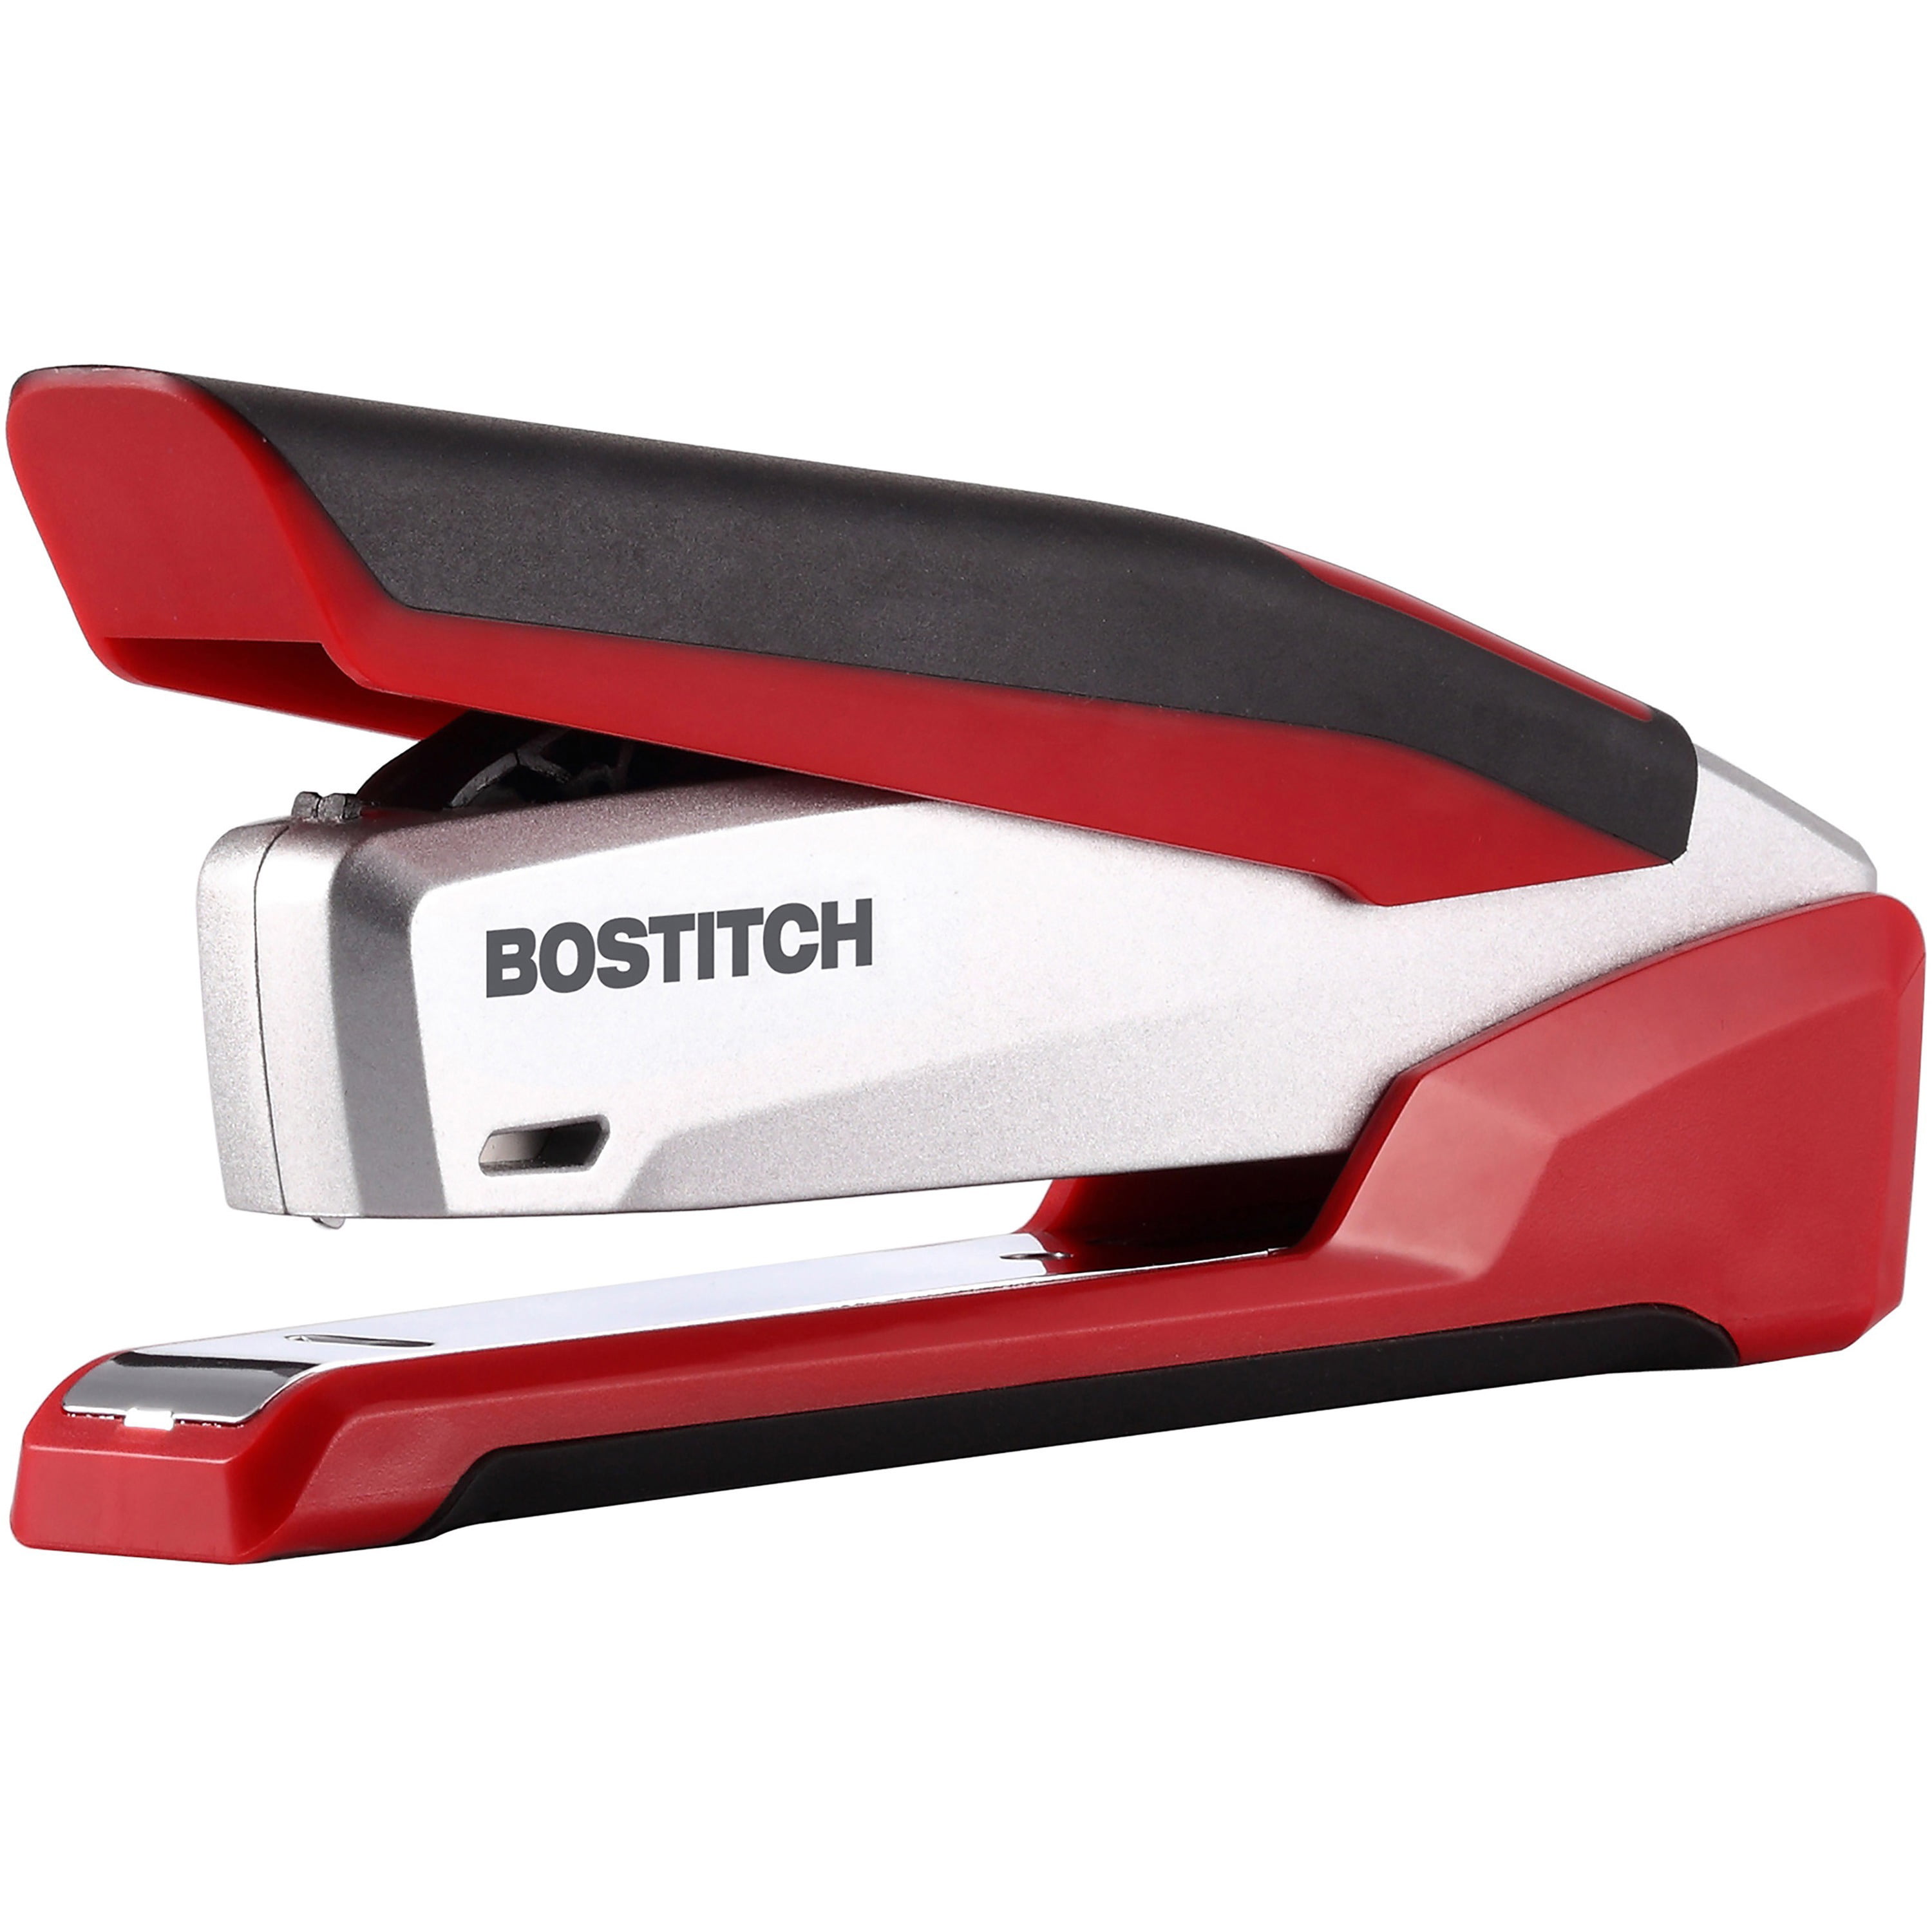 No Effort Bostitch InPower Spring-Powered Premium Desktop Stapler One Finger Red/Silver 2 Pack 1117 